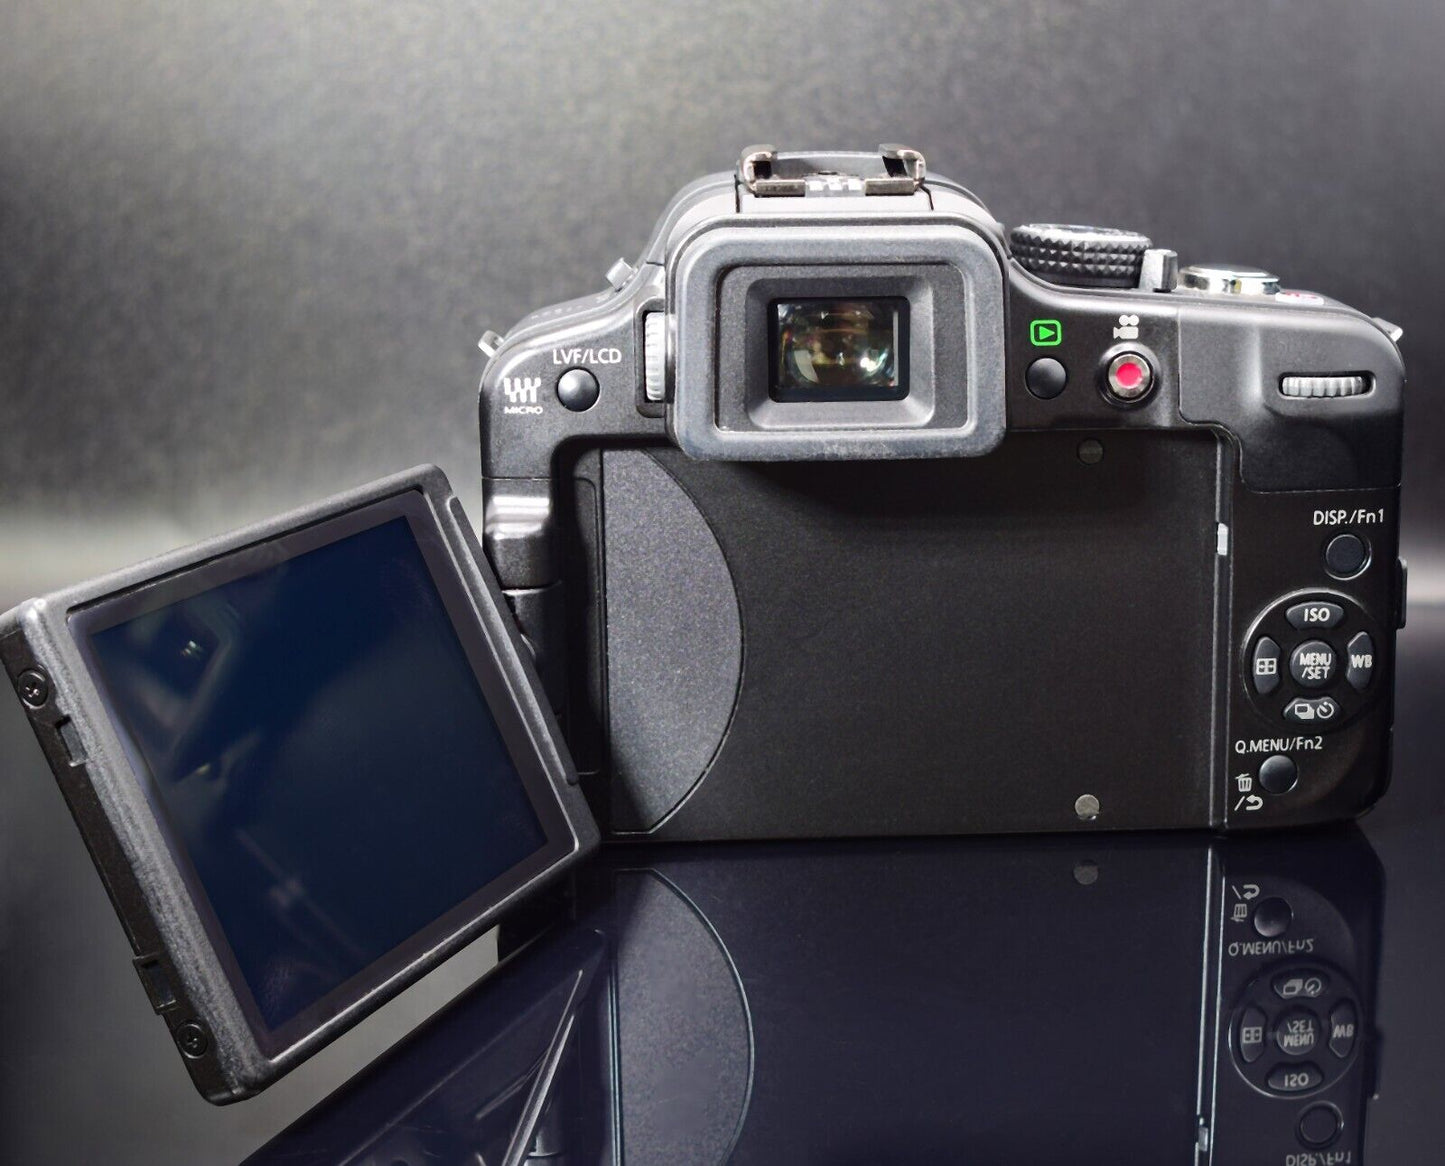 Panasonic Lumix DMC G3 Mirrorless Digital Camera & 14-42mm f/3.5-5.6 ASPH Lens